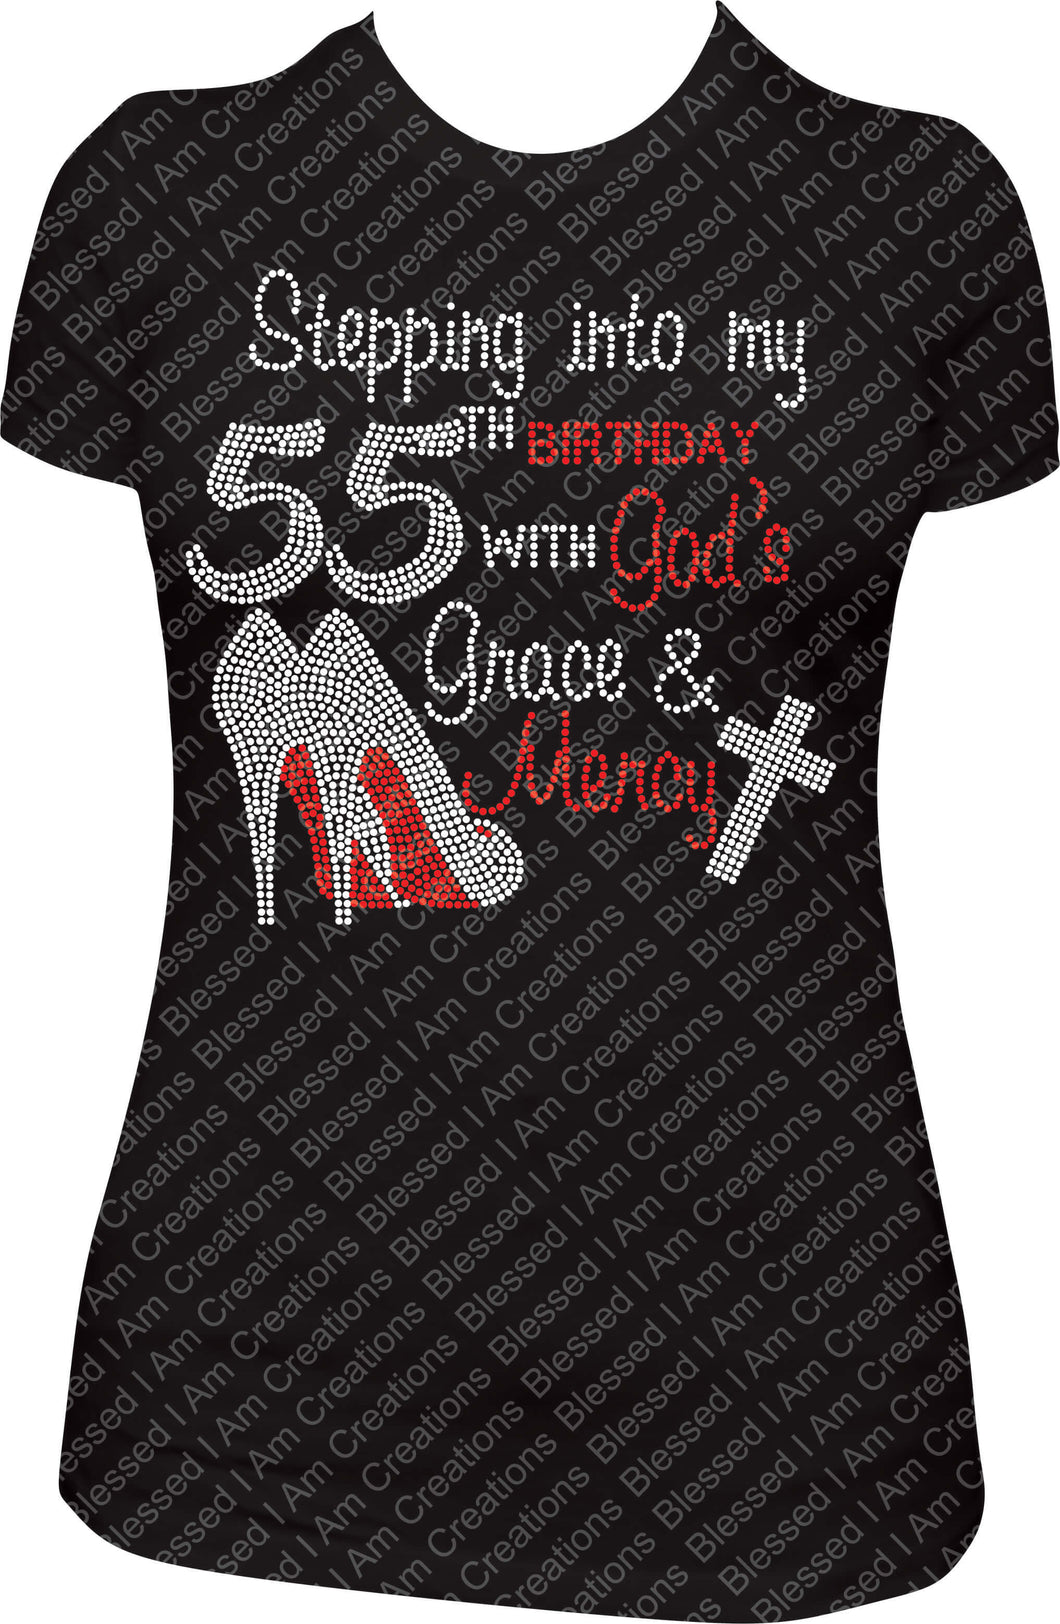 Stepping into my 55th Birthday With God's Grace and Mercy Rhinestone Birthday Shirt